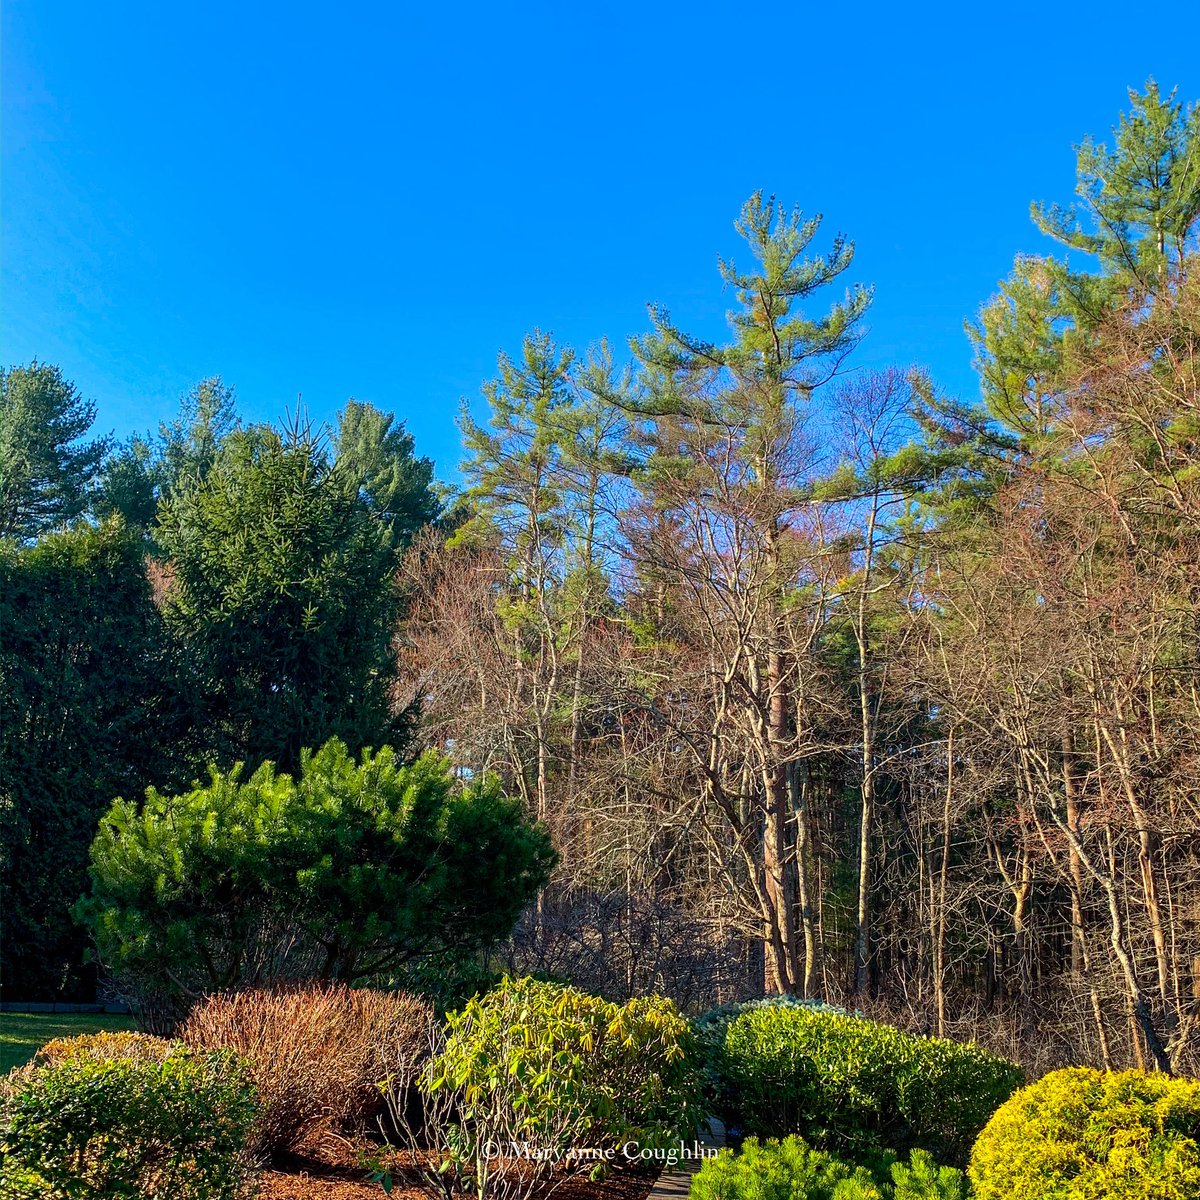 Sunshine and blue skies. Early spring New England garden #momentsofbeauty 
#beautiful #Massachusetts #newengland #garden #inthegarden #naturephotgraphy #landscapephotography #bestofthebaystate #newenglandlife #scenesofnewengland #trees #DepthOfField @ThePhotoHour @LensAreLive